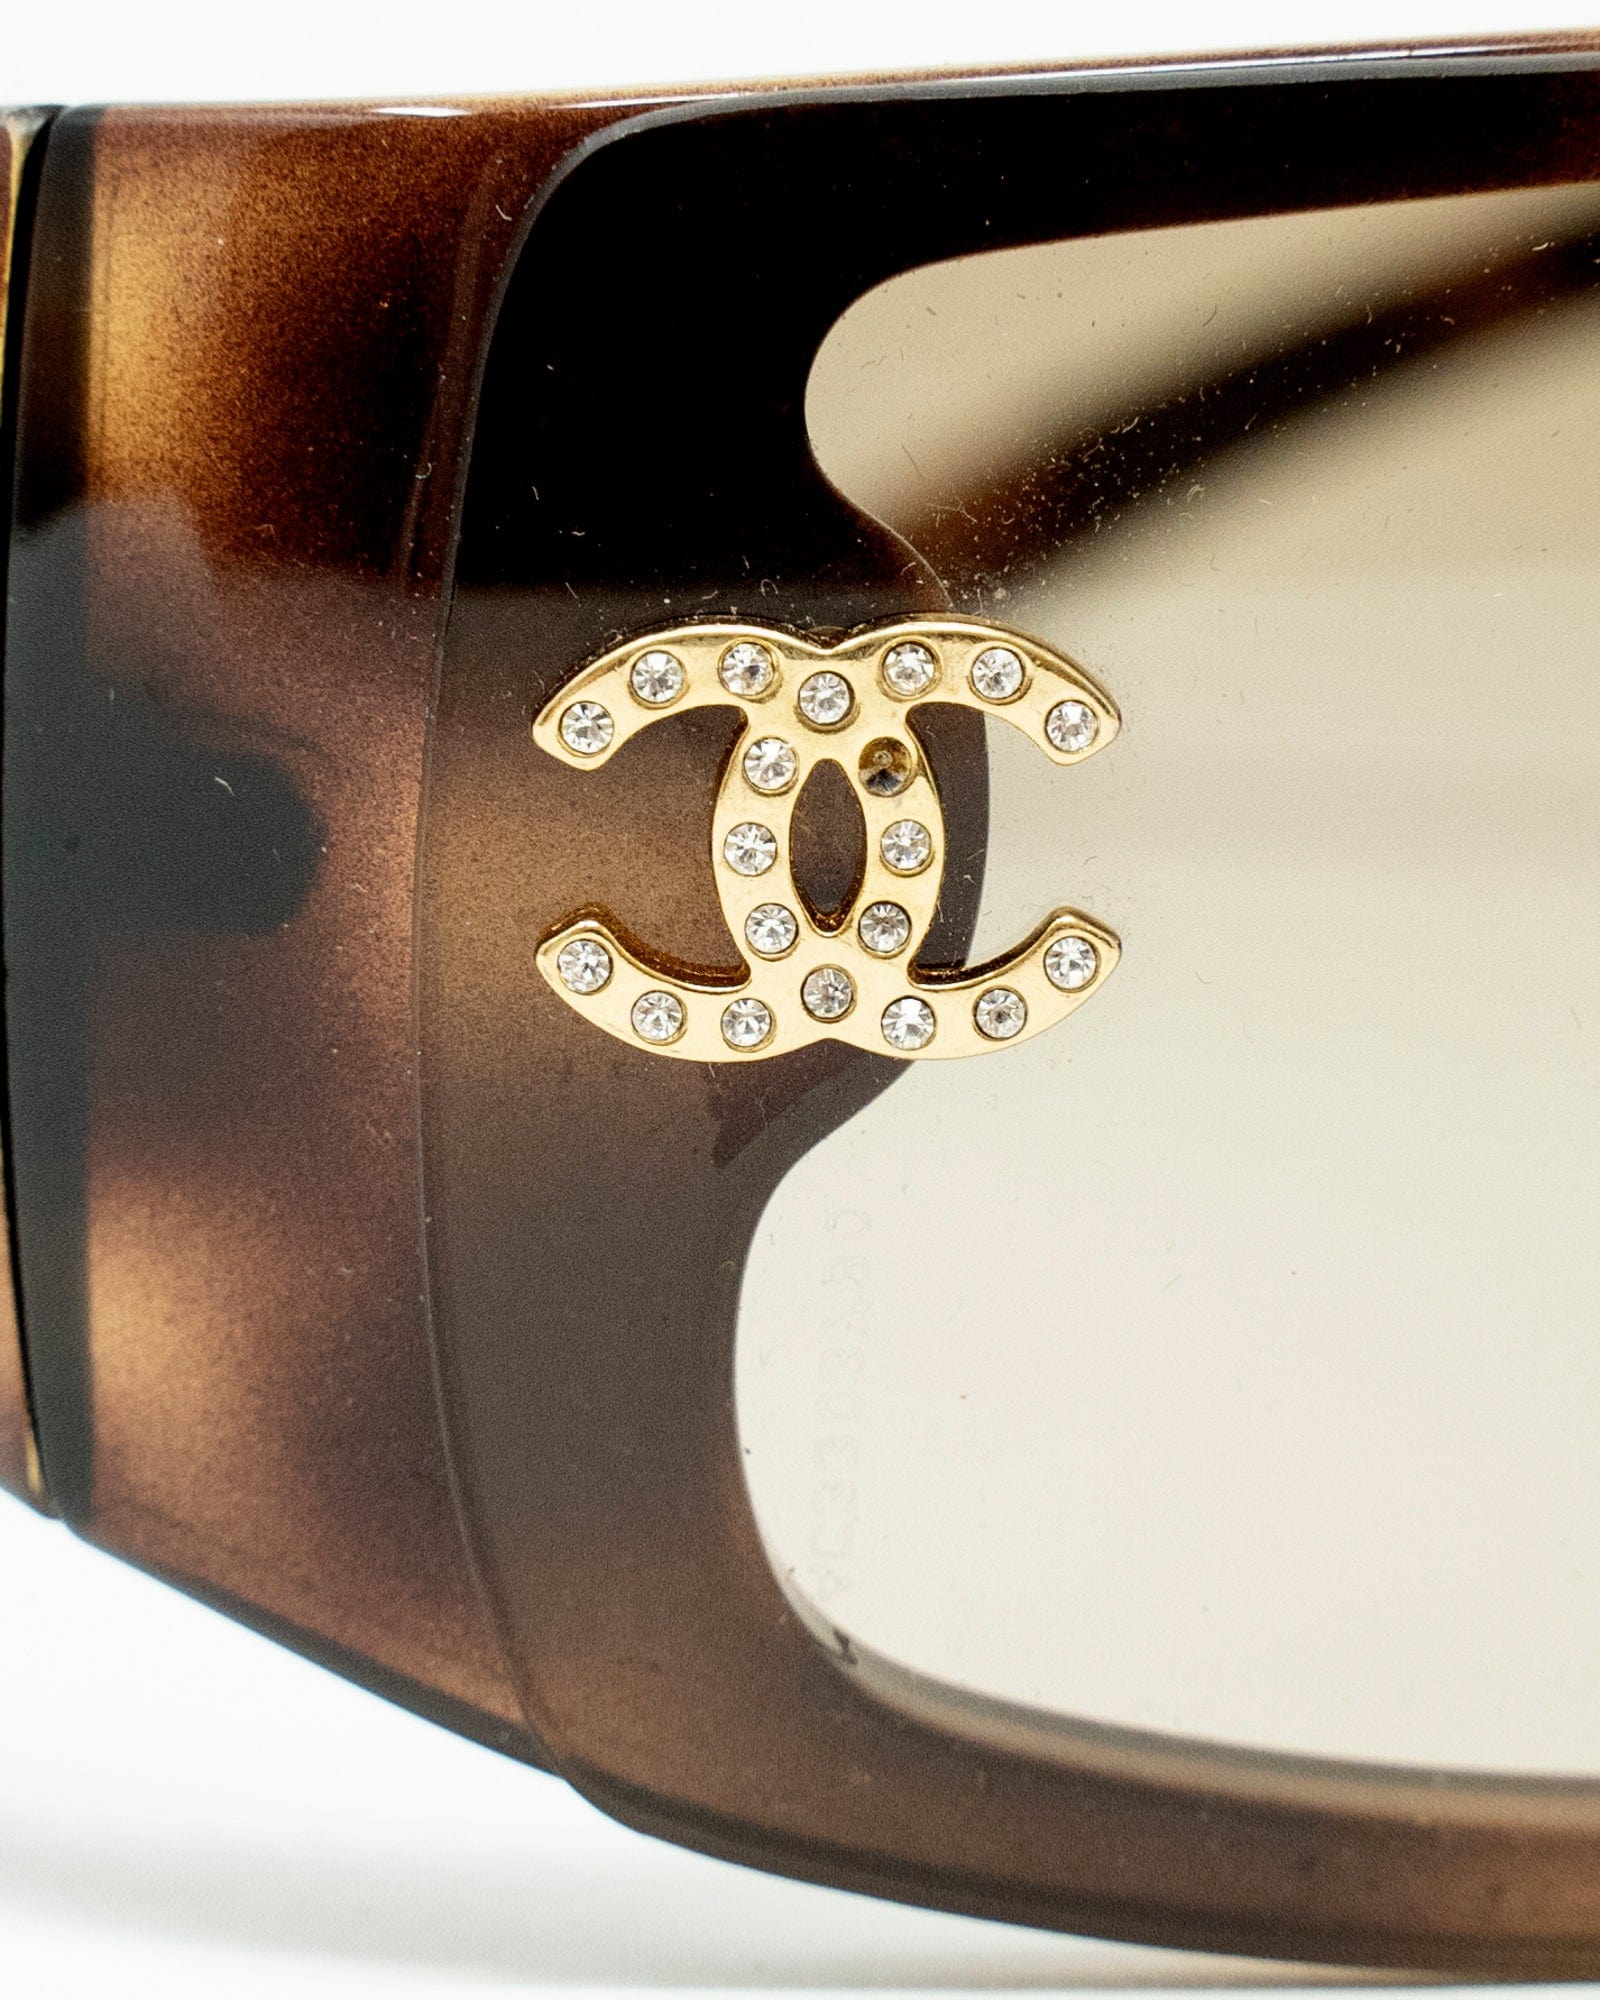 Chanel Chanel Diamante CC Tortoishelle Sunglasses - AGL1945